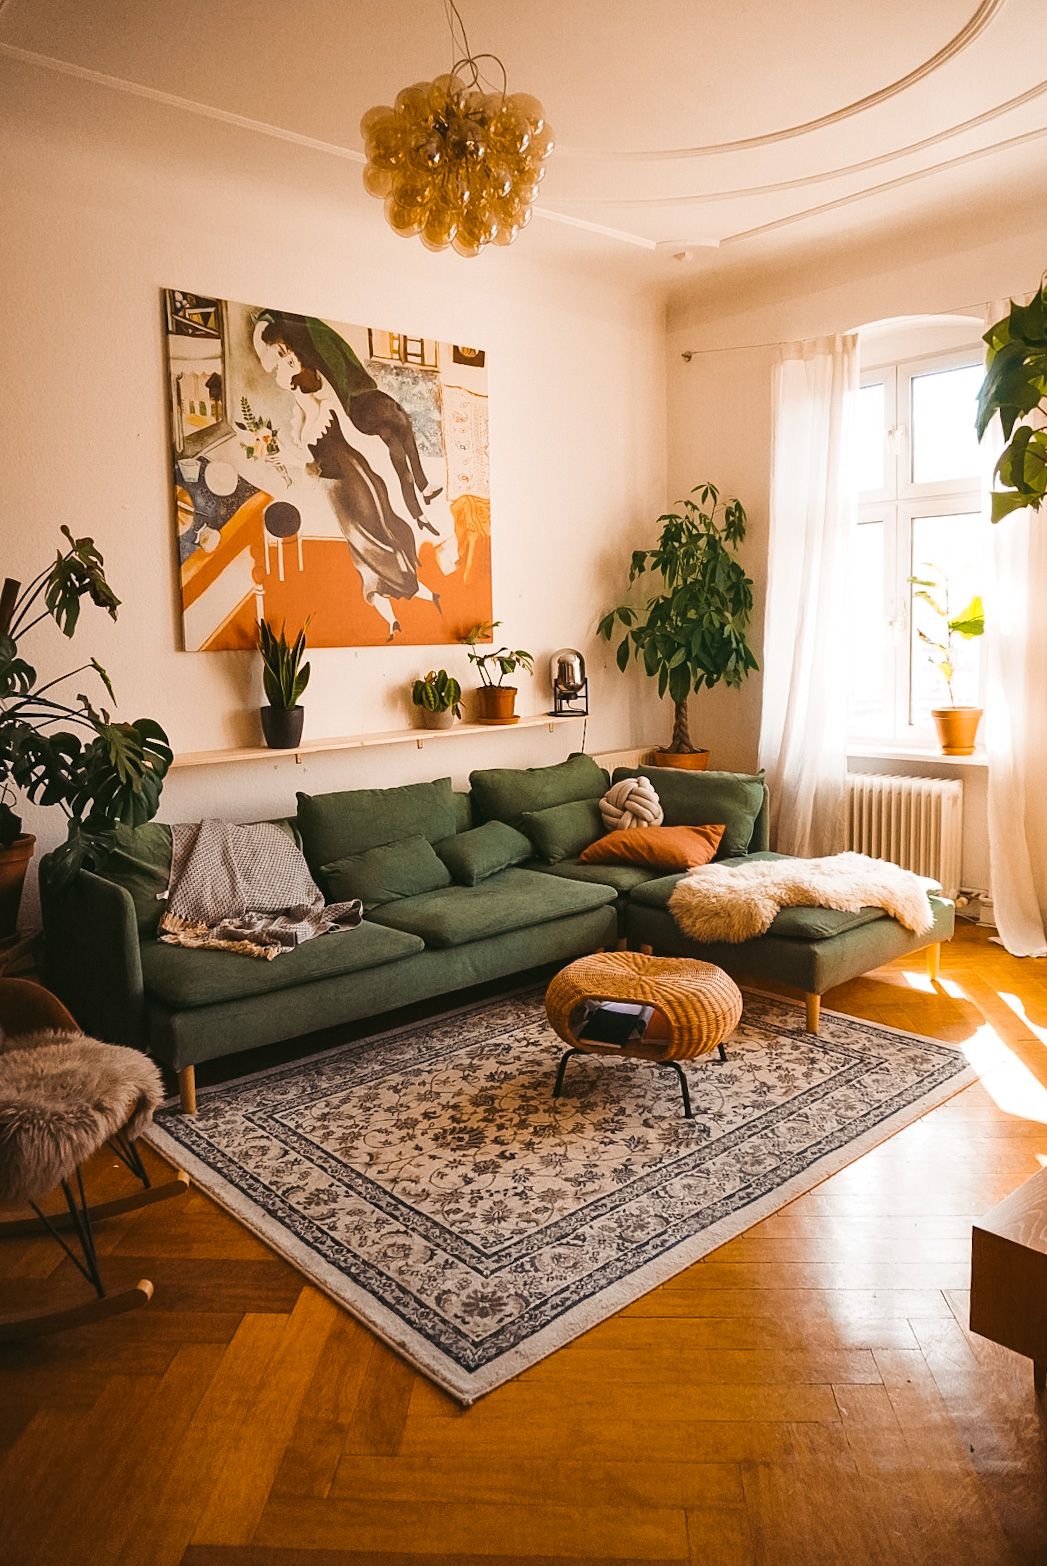 Should you go for a Green Sofa?